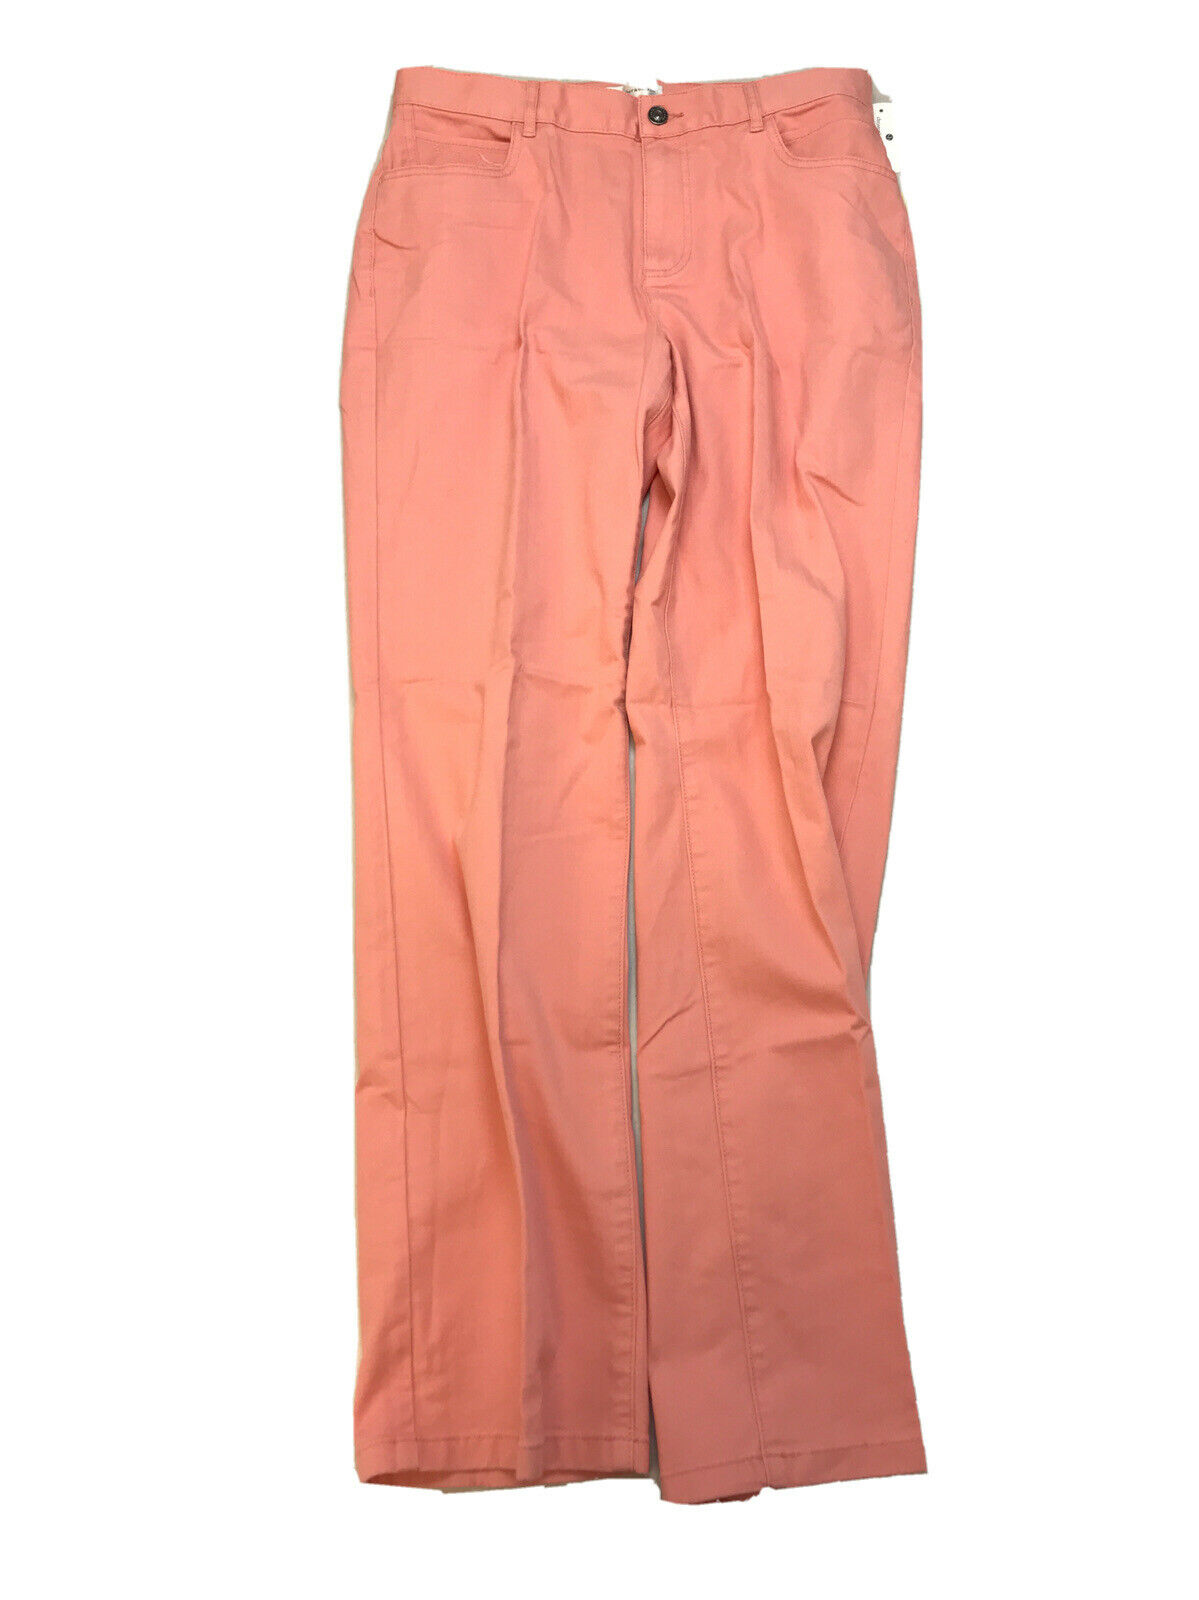 NEW Christopher & Banks Women's Pink Modern Fit Pants Sz 10